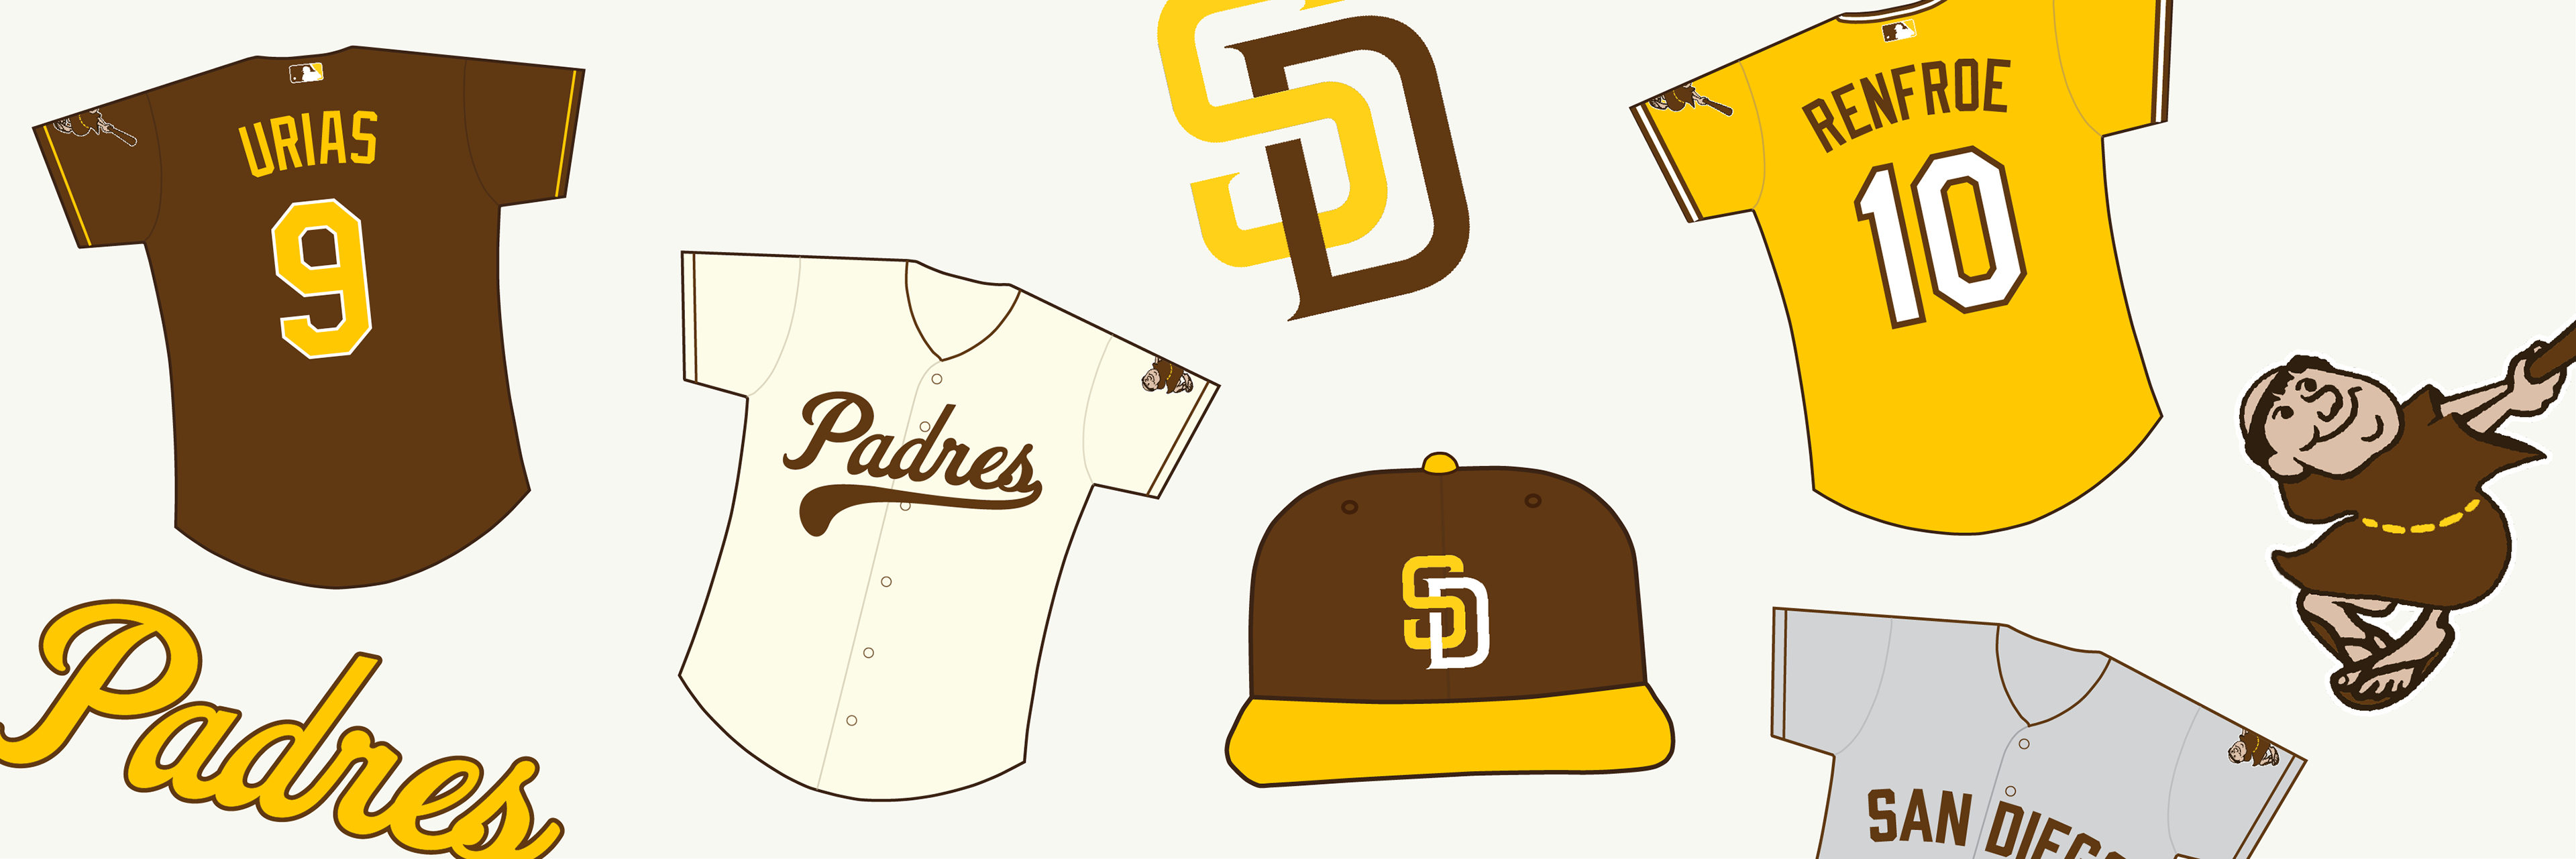 Brad Wolf Design - San Diego Padres Rebrand Concept